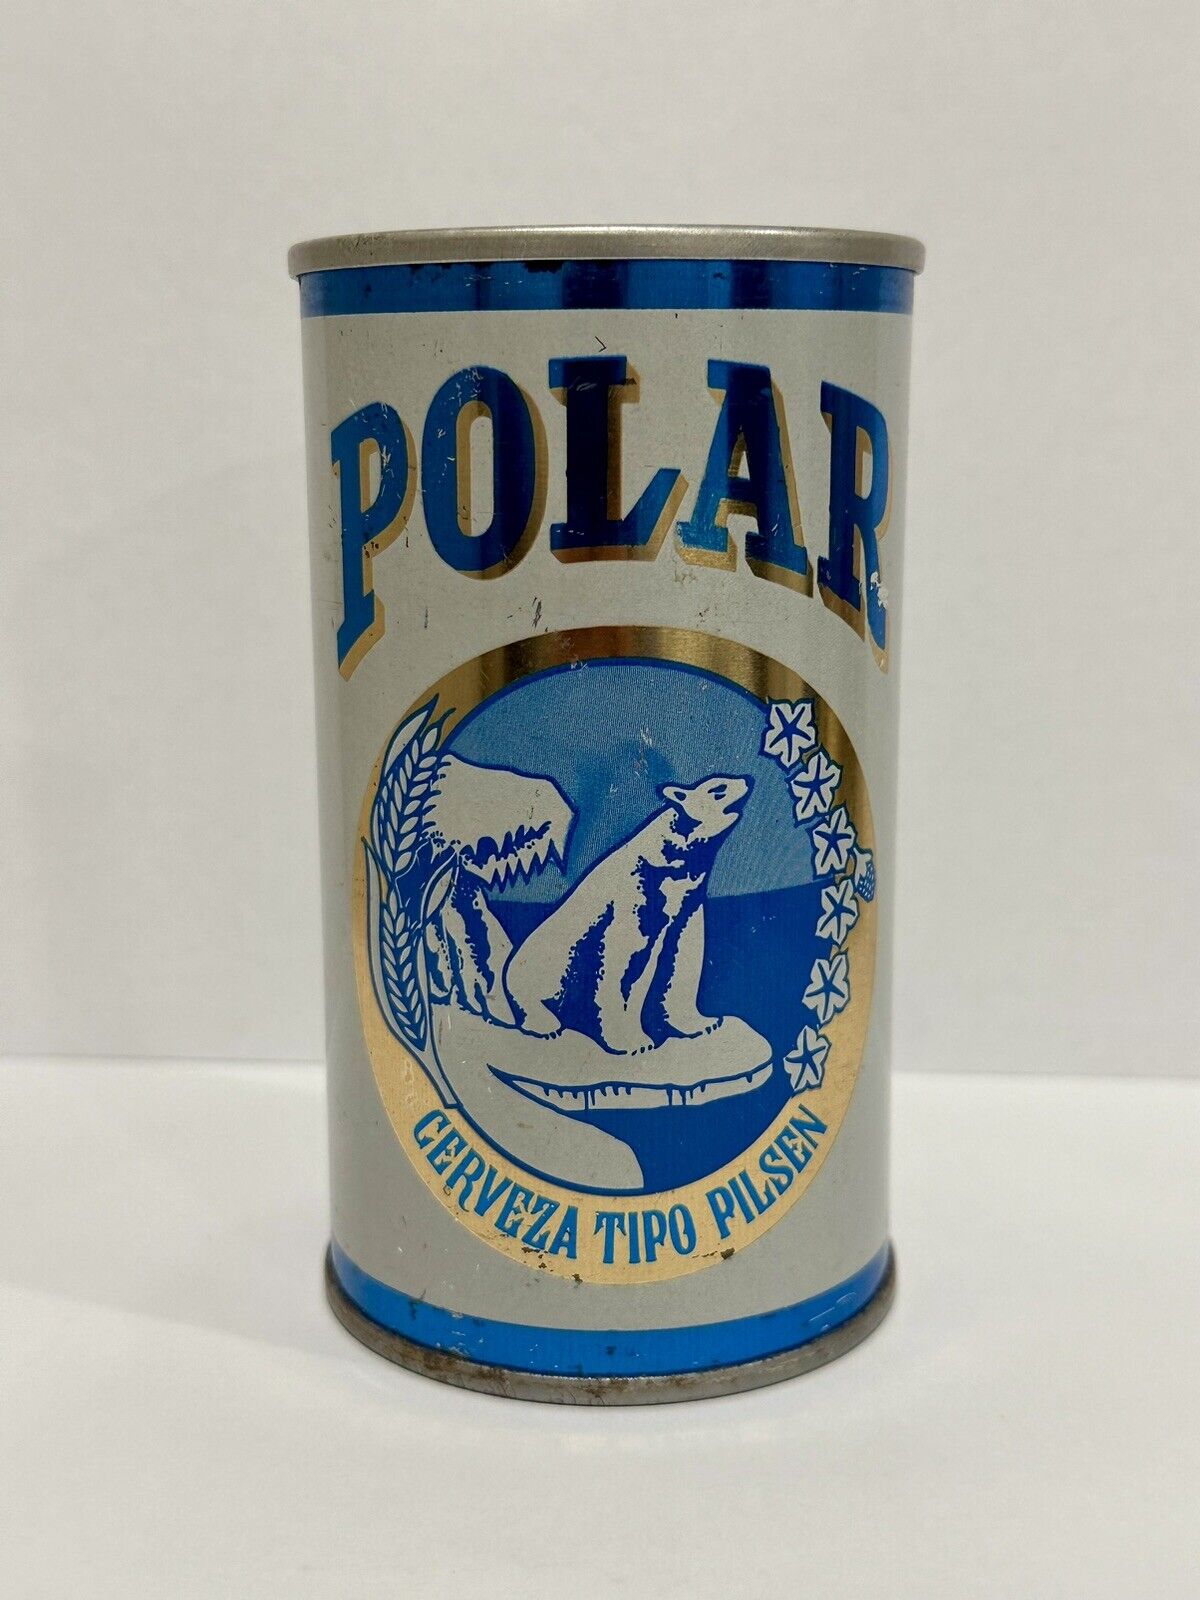 Vintage POLAR Cerveza Tipo Pilsen Beer Can - Straight Steel - Venezuela